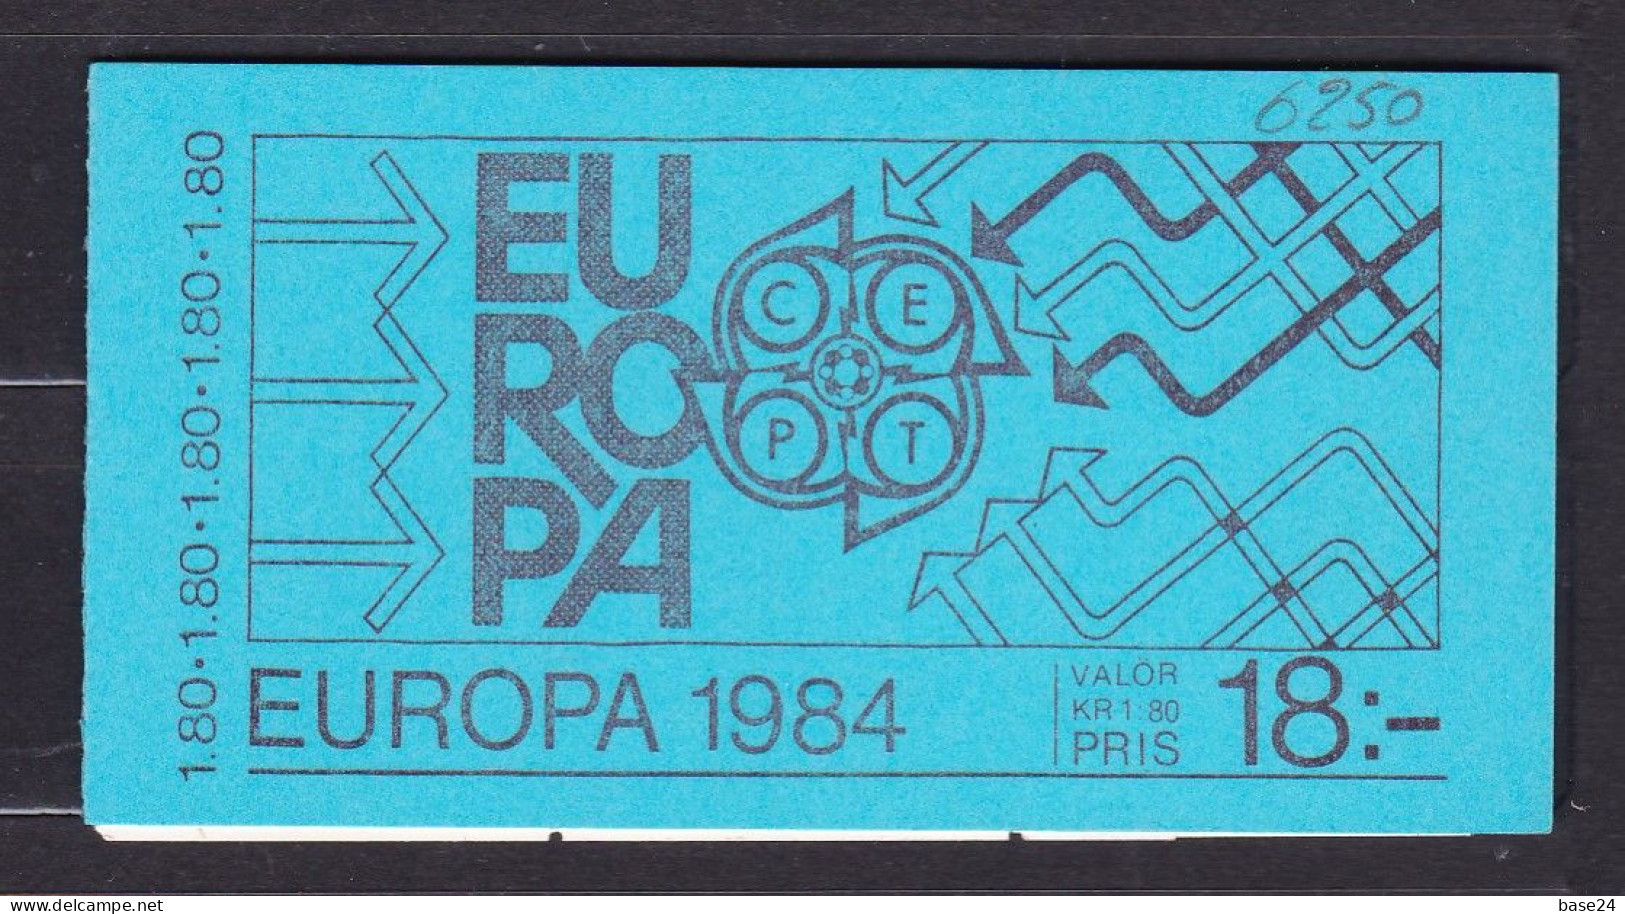 1984 Svezia Sweden EUROPA CEPT EUROPE Libretto MNH** PONTE BRIDGE Booklet - 1984